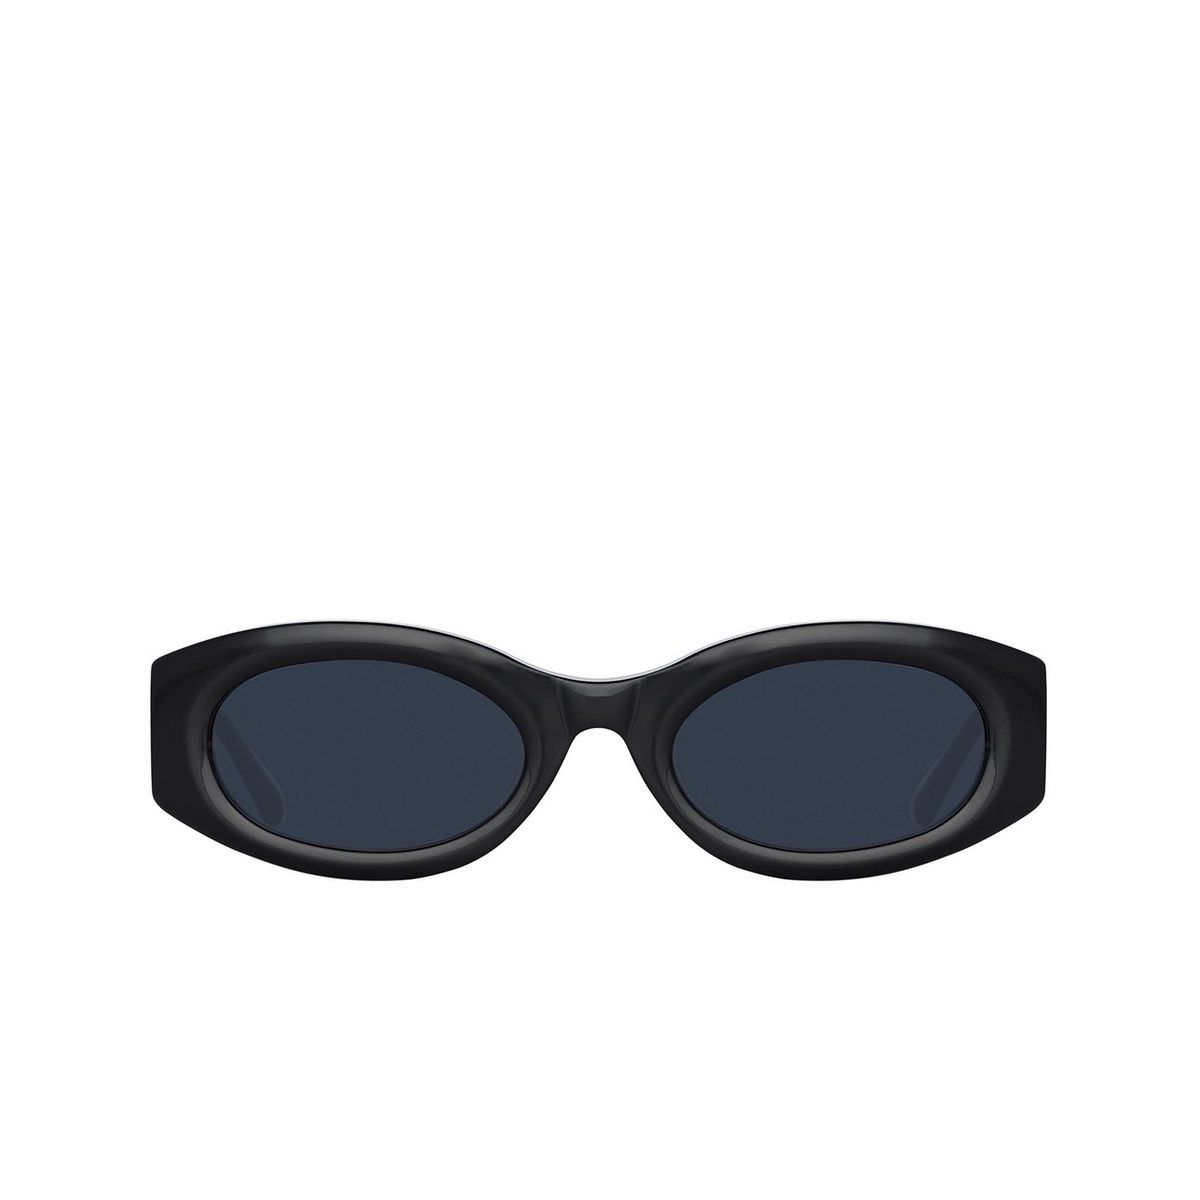 Linda Farrow BERTA Sunglasses 1 Black / Silver - front view